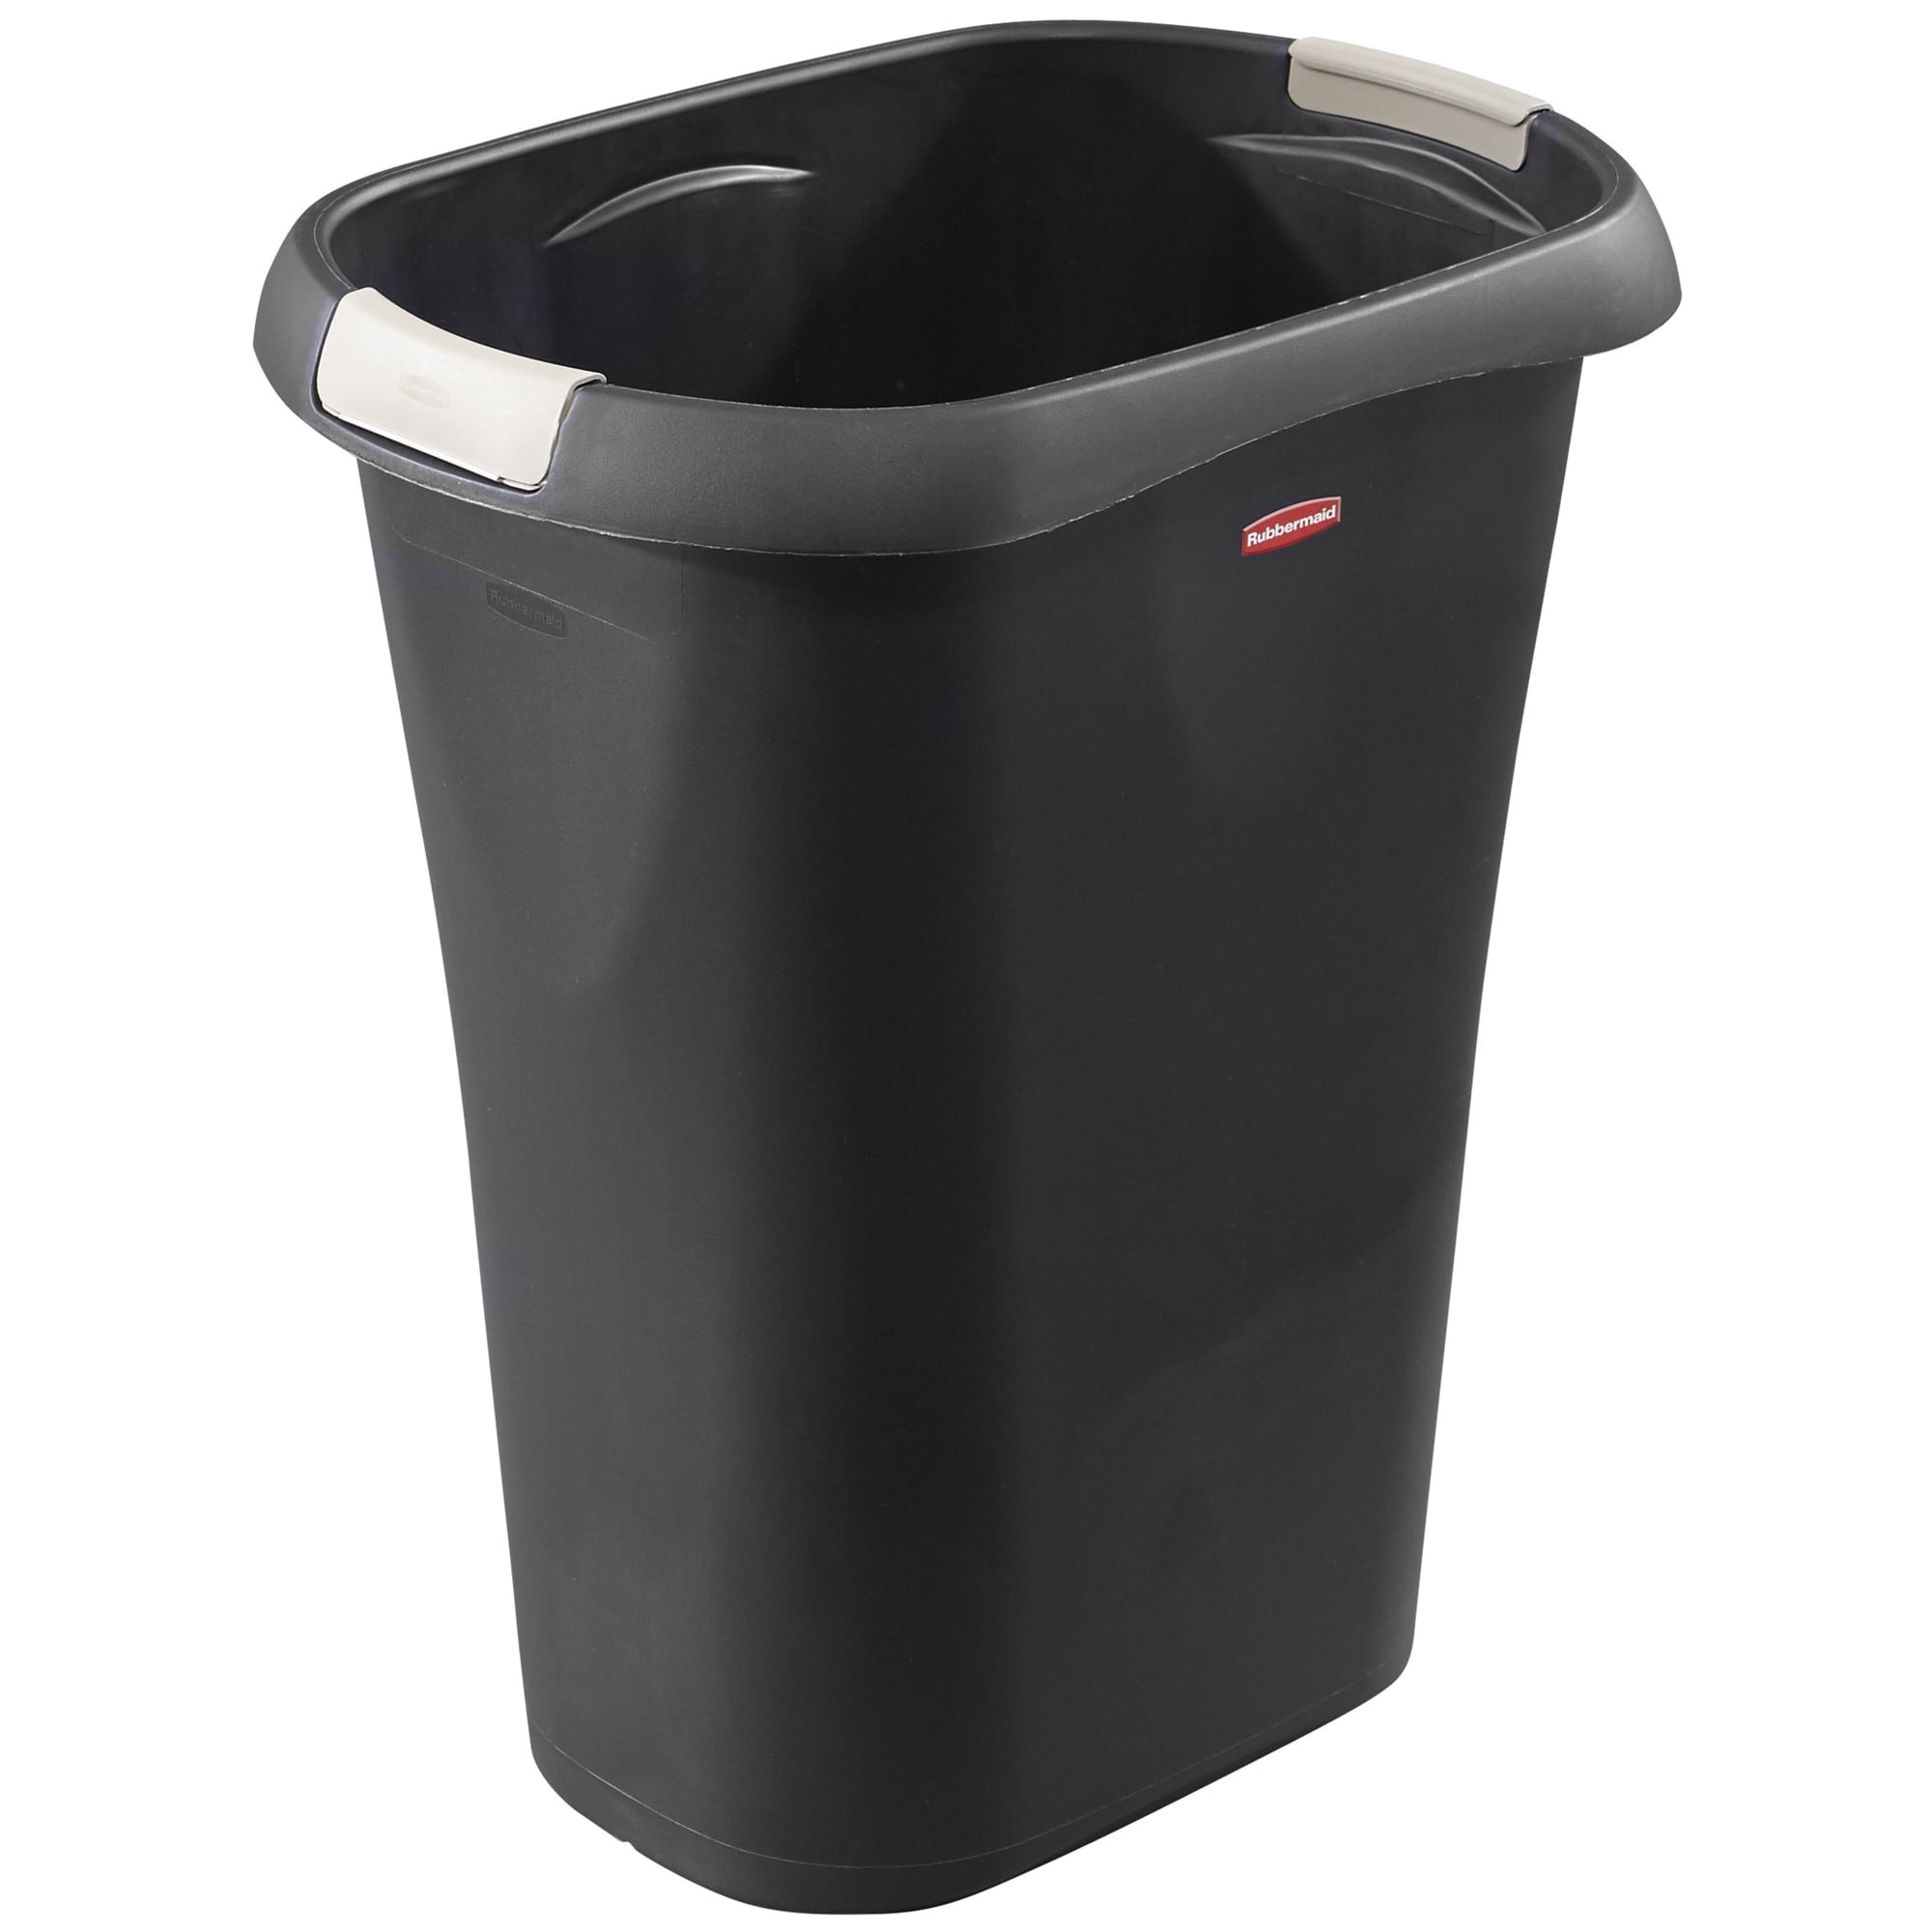 PLASTIC TRASH CAN Rubbermaid Garbage Recycle Waste Bin 7 Gal Black Home Office 